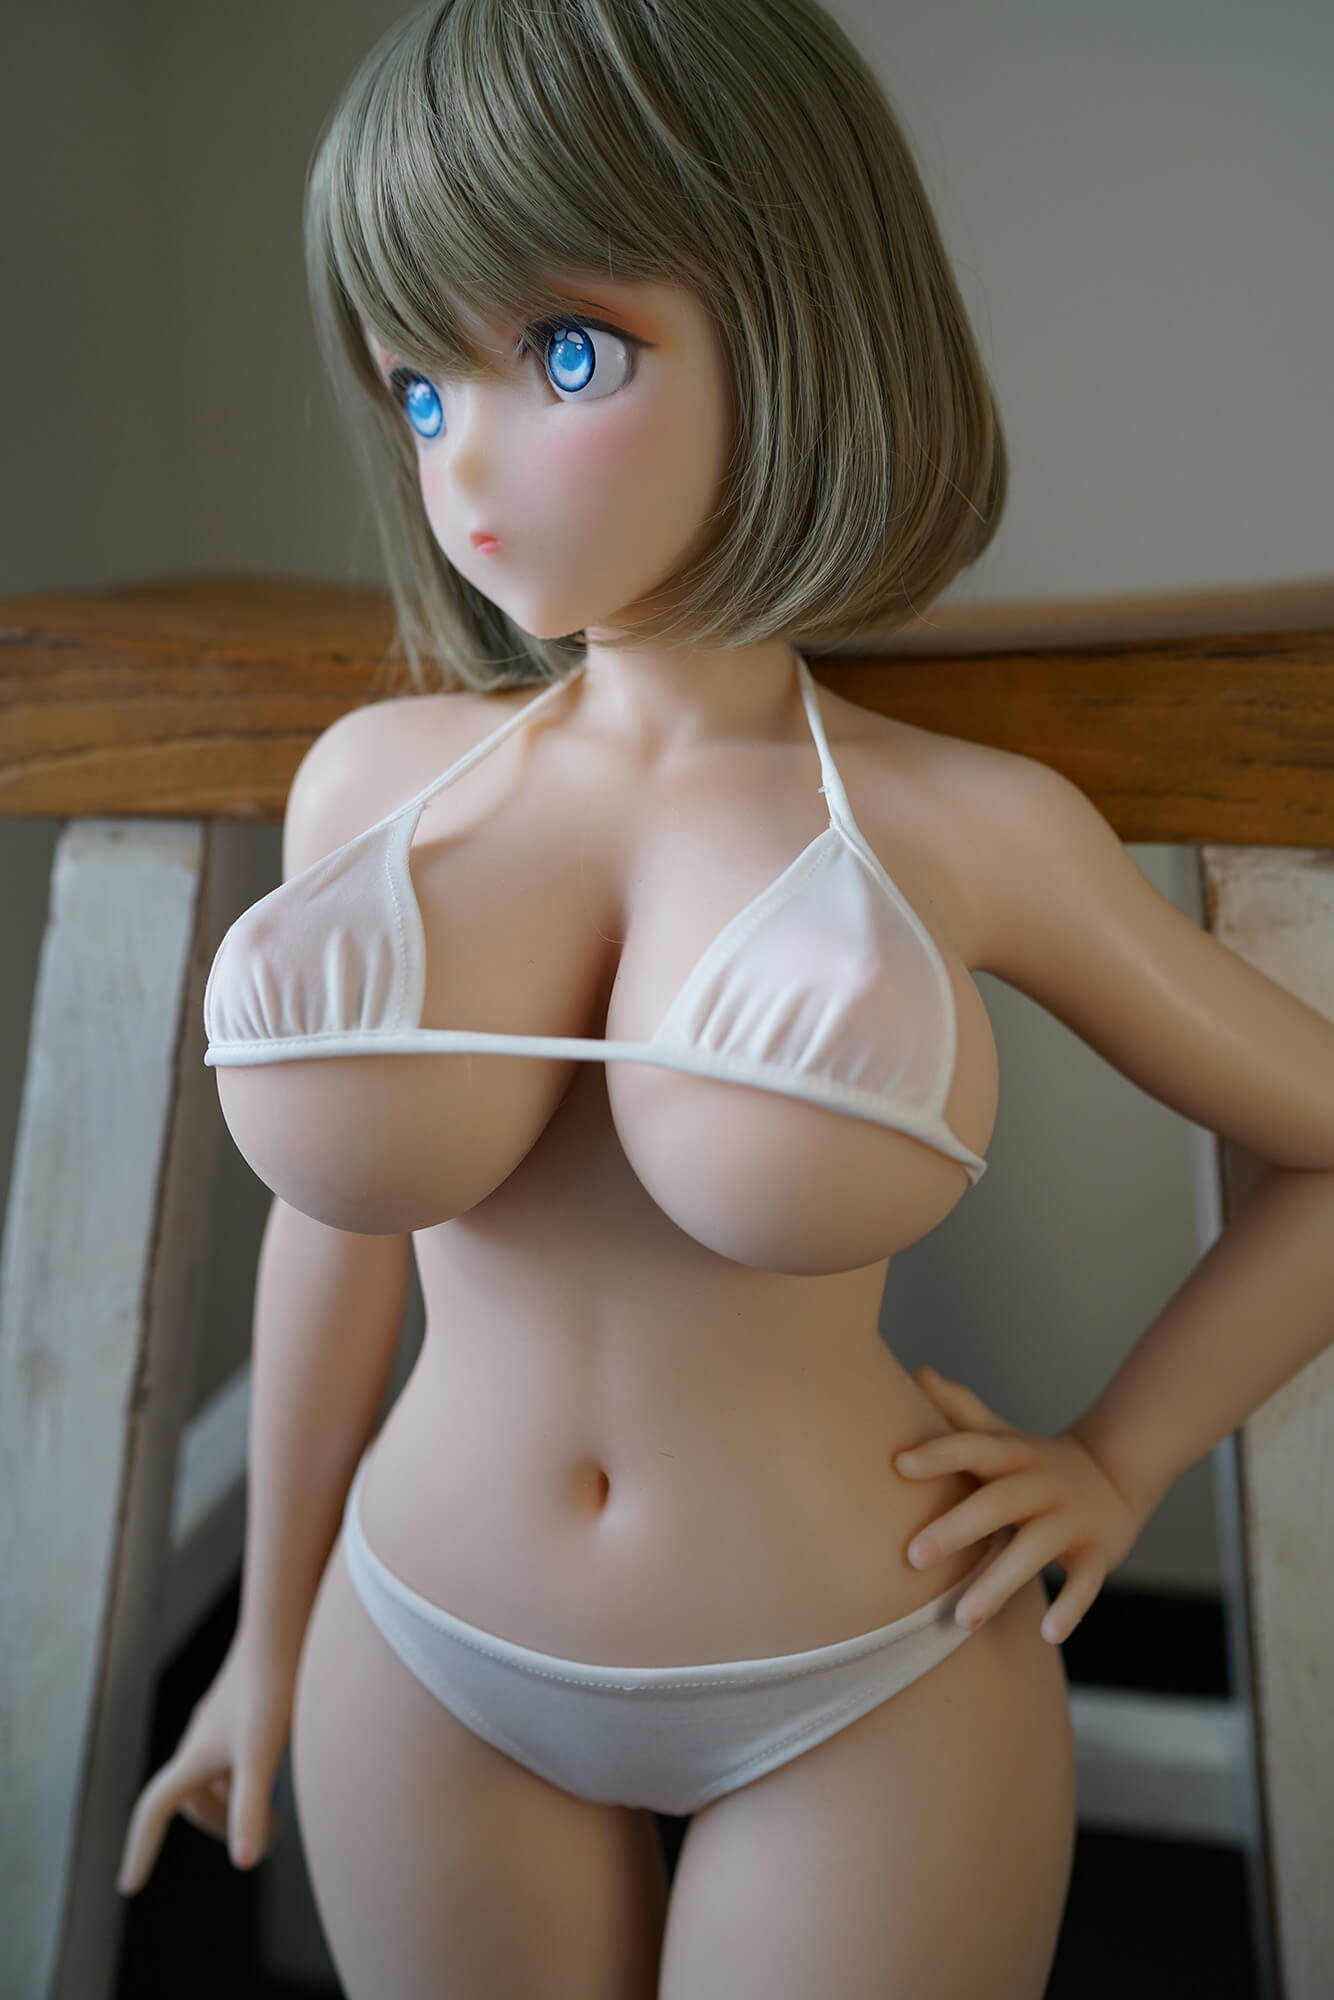 Anak Patung Seks Anime Mini Dengan Mata Biru